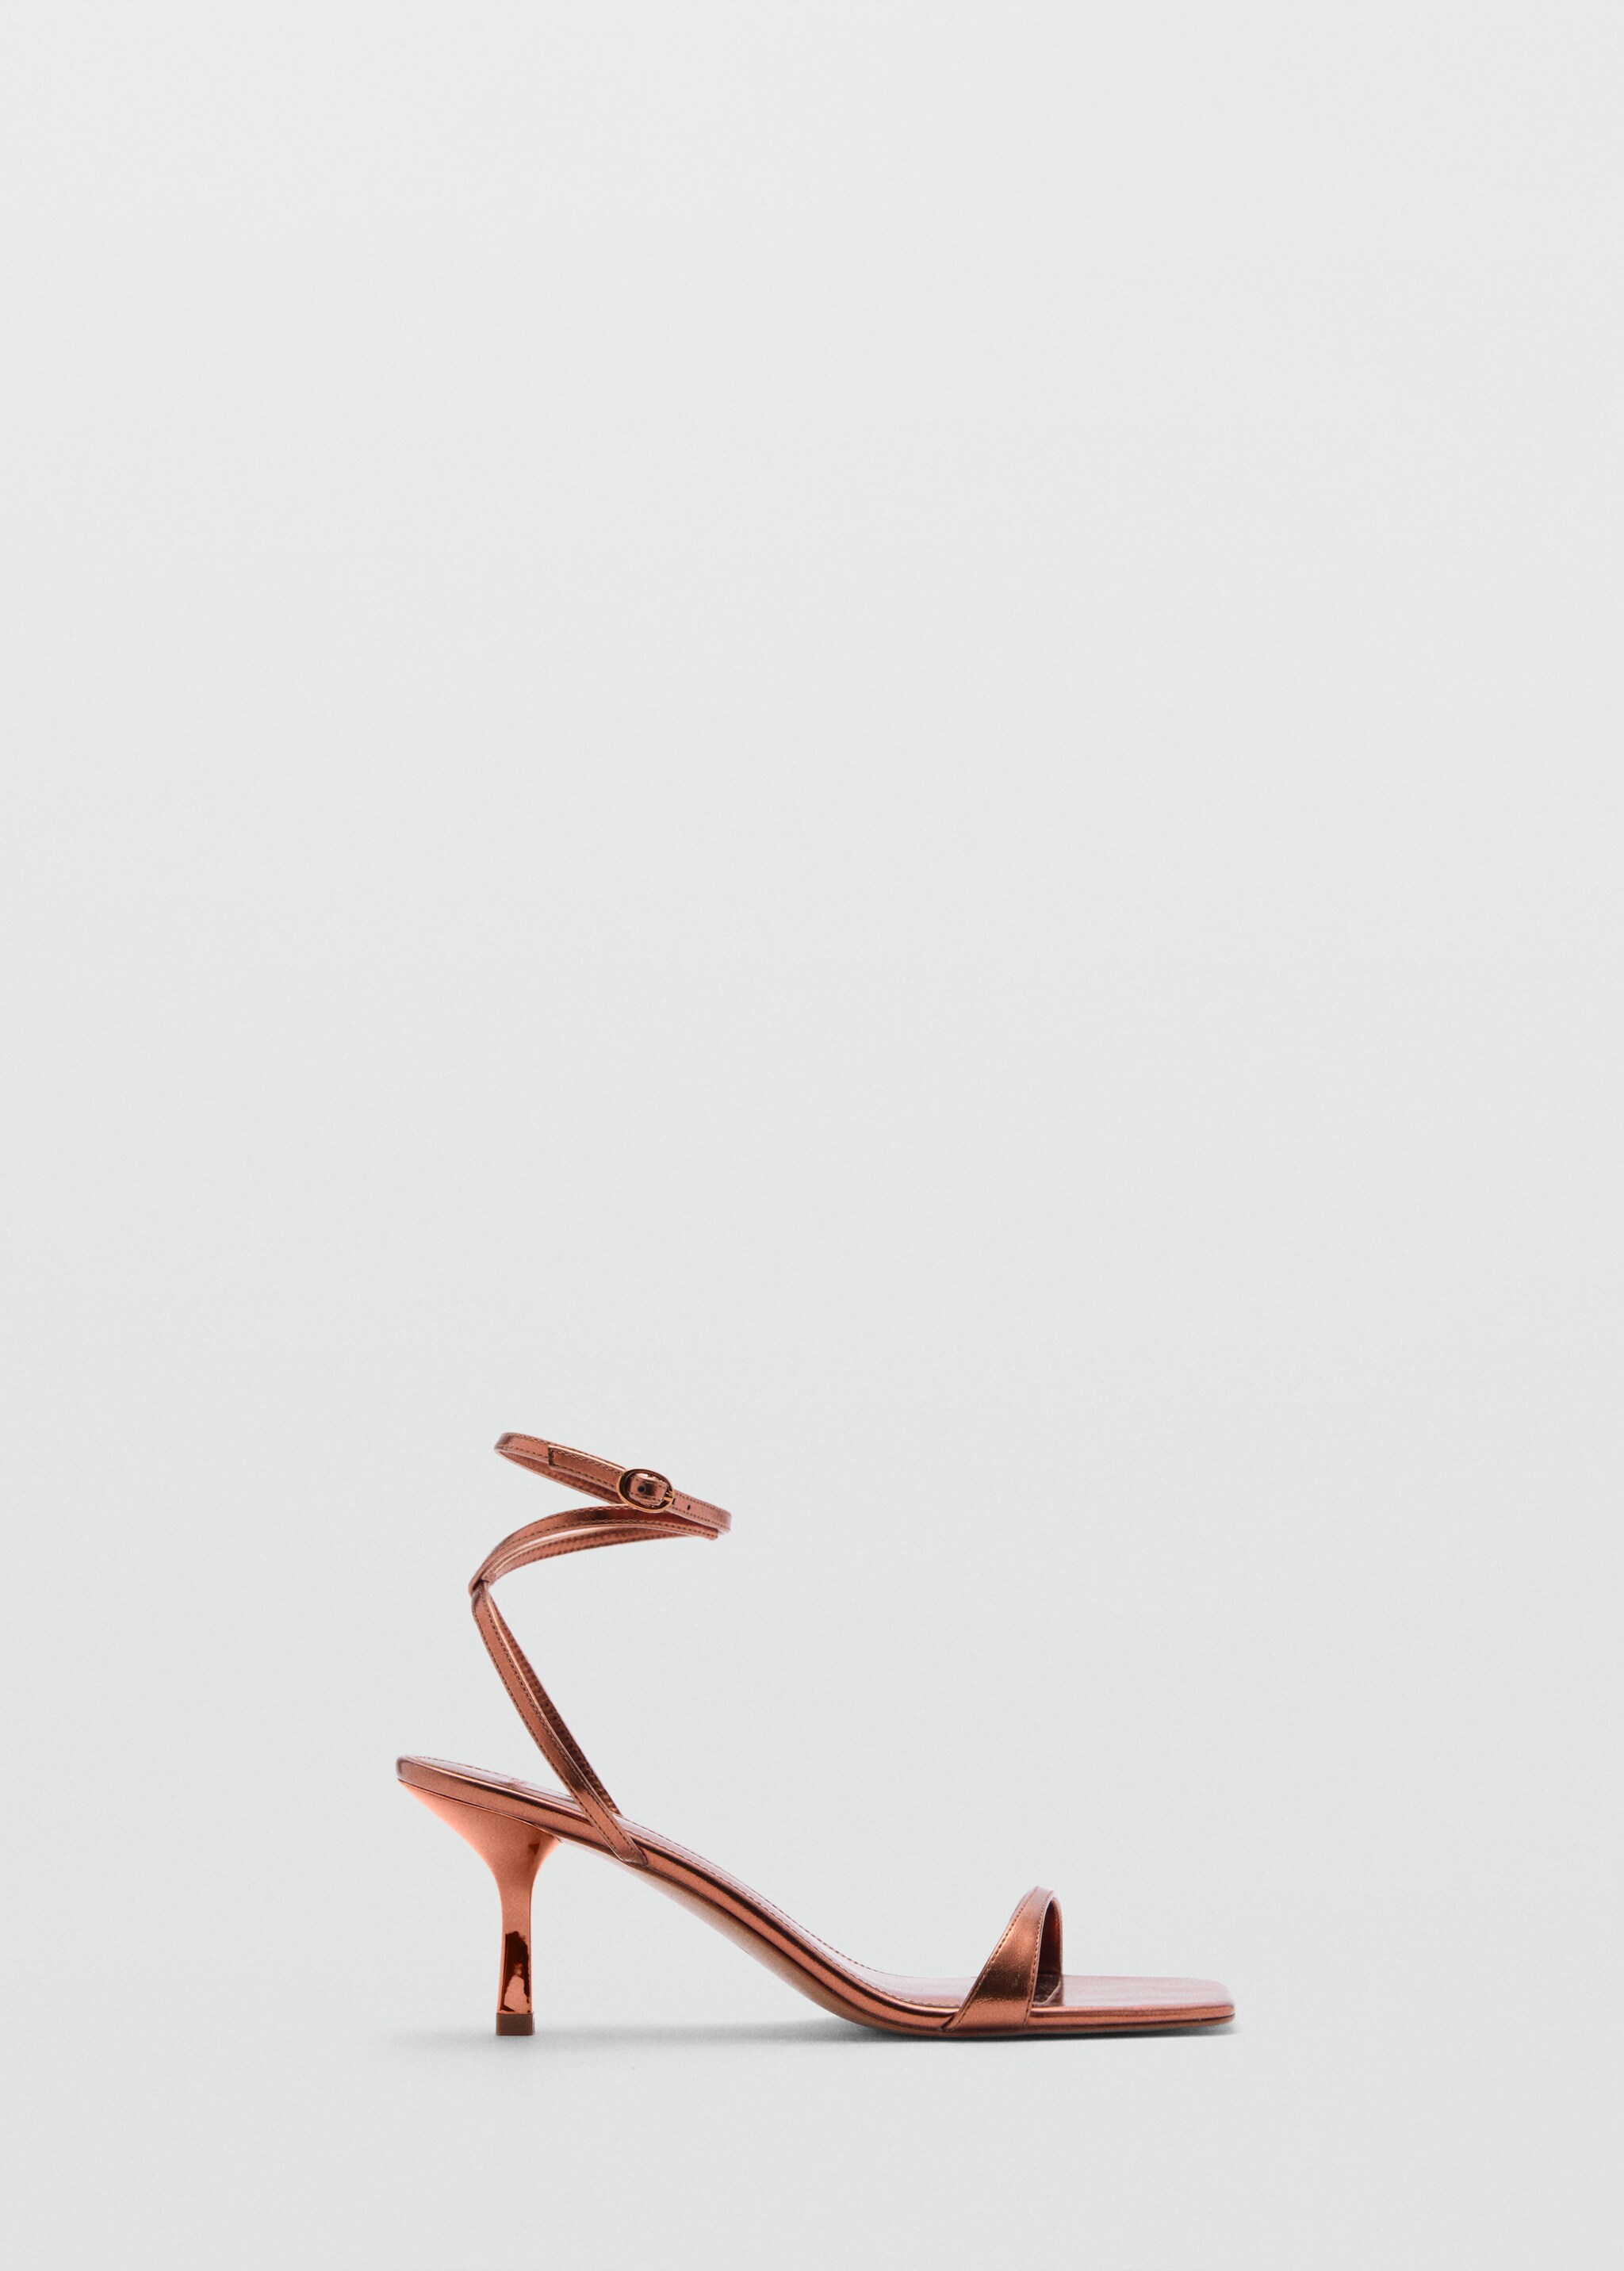 Босоножки на каблуке с ремешками - Изделие без модели